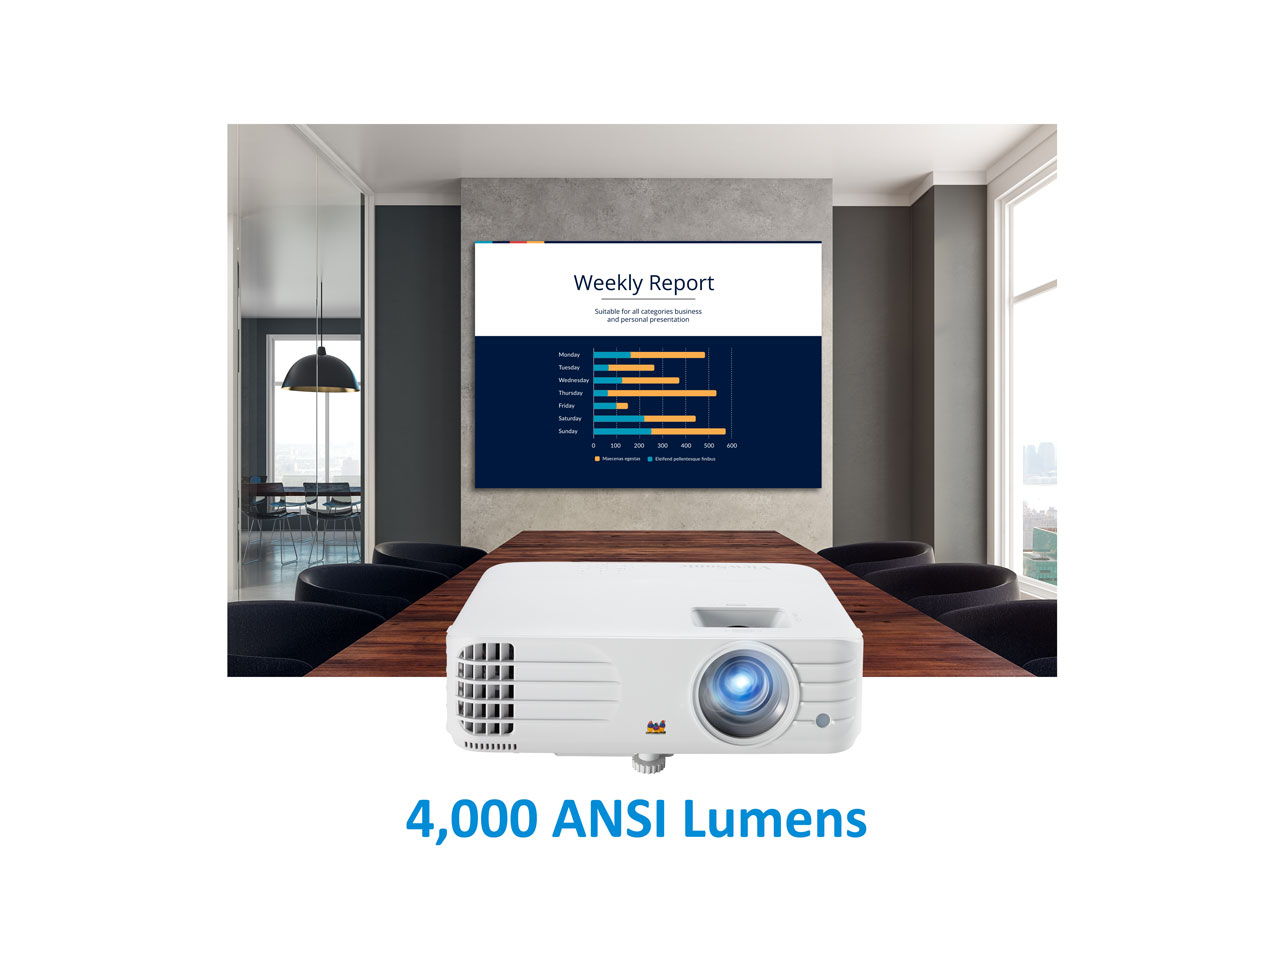 01_PG706HD_4000-ANSI-Lumens.jpg